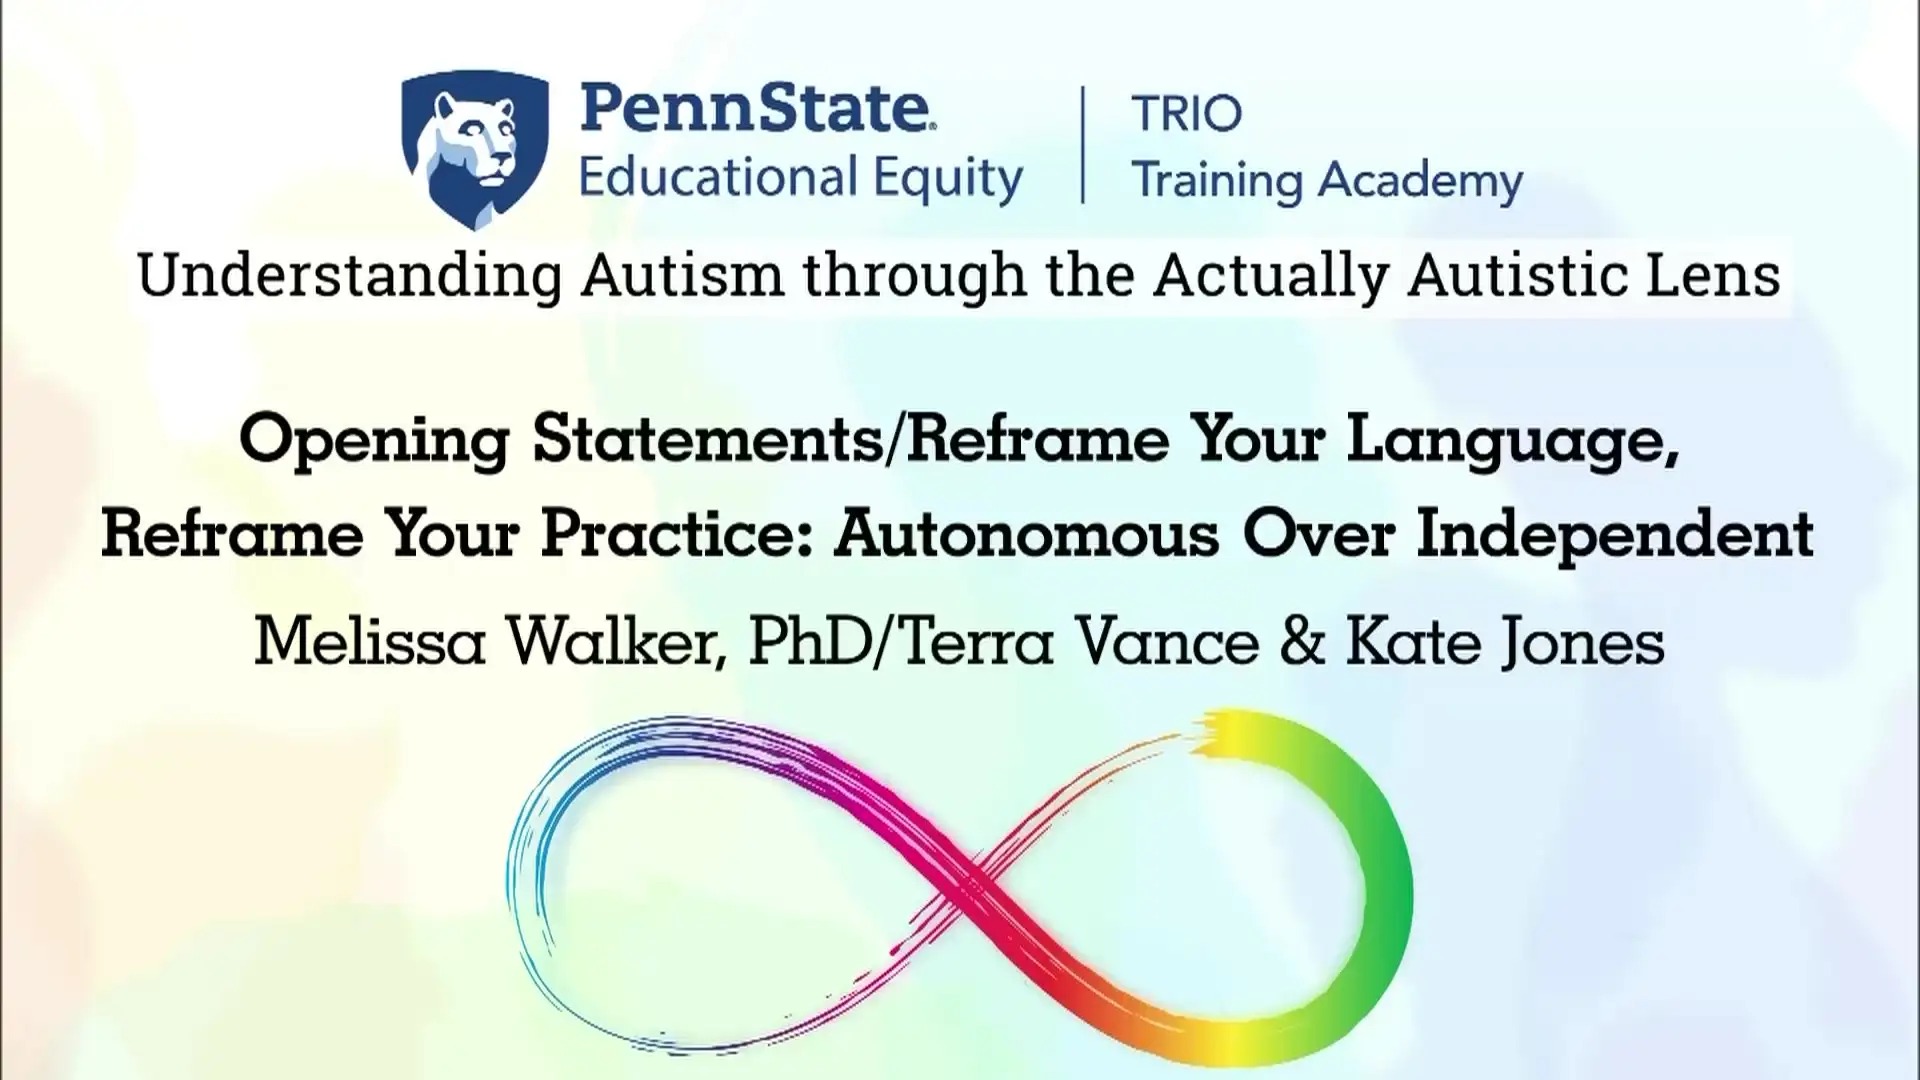 Opening Statements/Reframe Your Language, Reframe Your Practice: Autonomous Over Independent | Melissa Walker, PhD/Terra Vance & Kate Jones